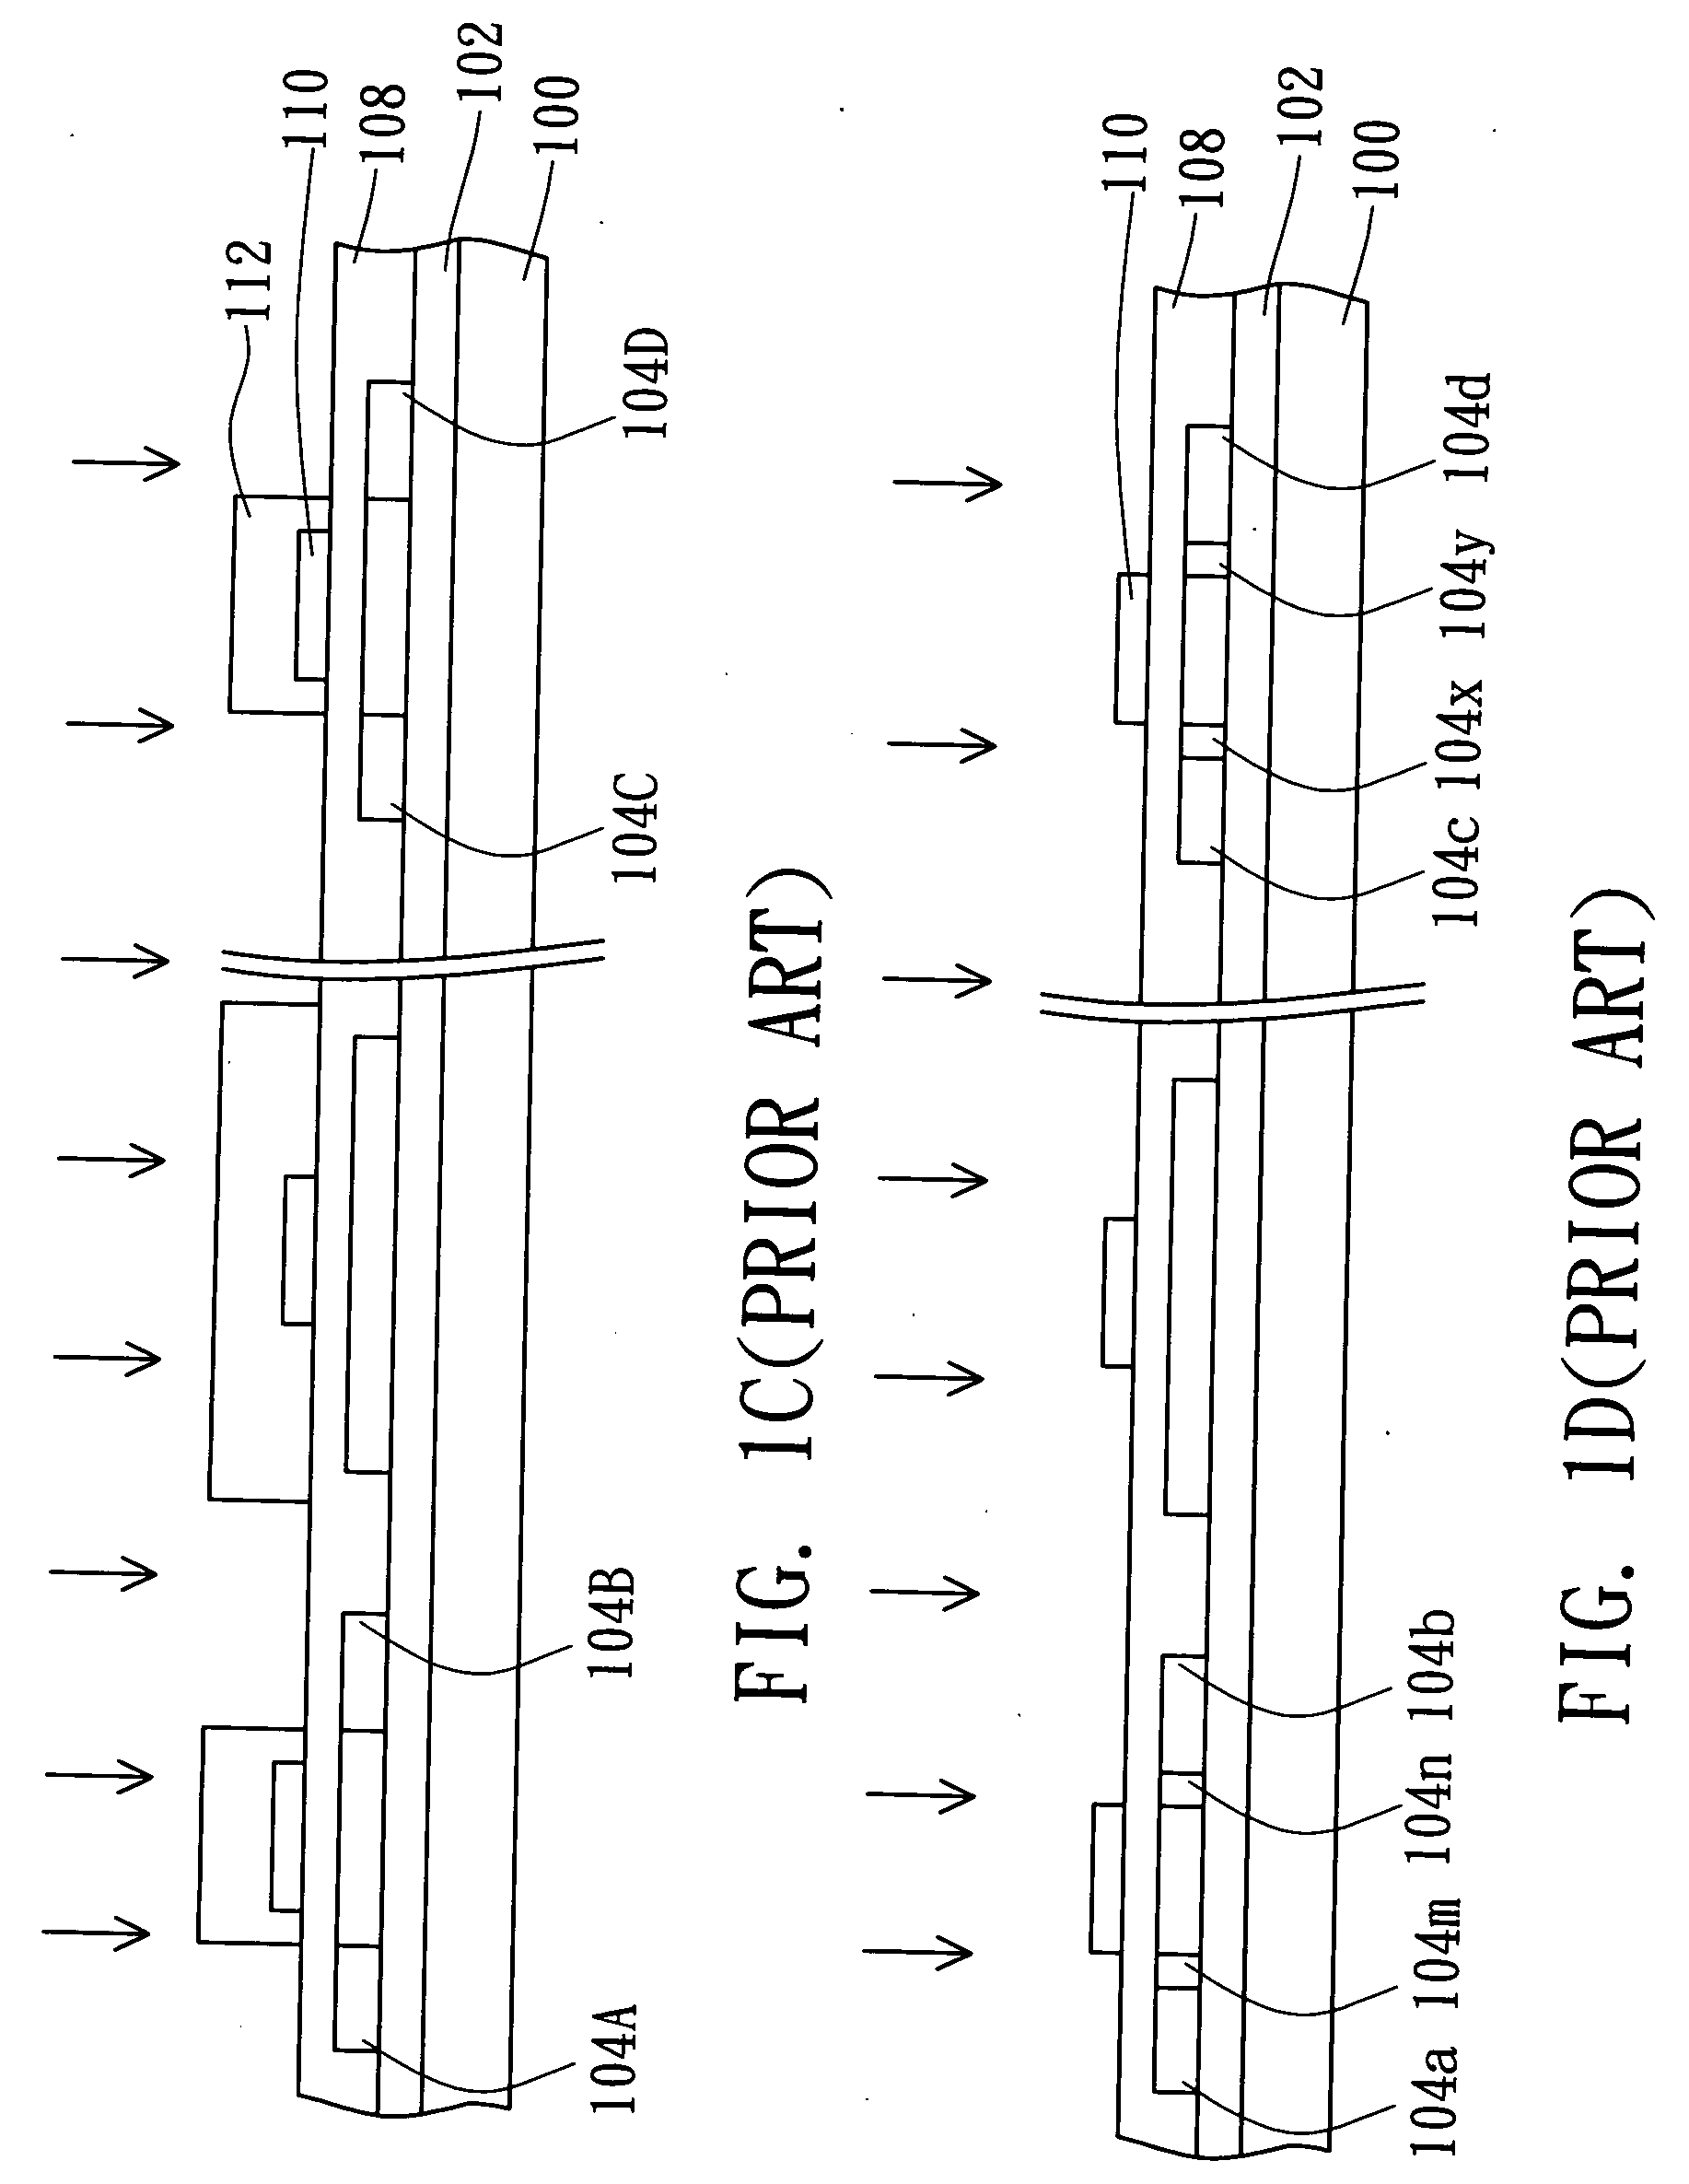 Method of forming a CMOS transistor